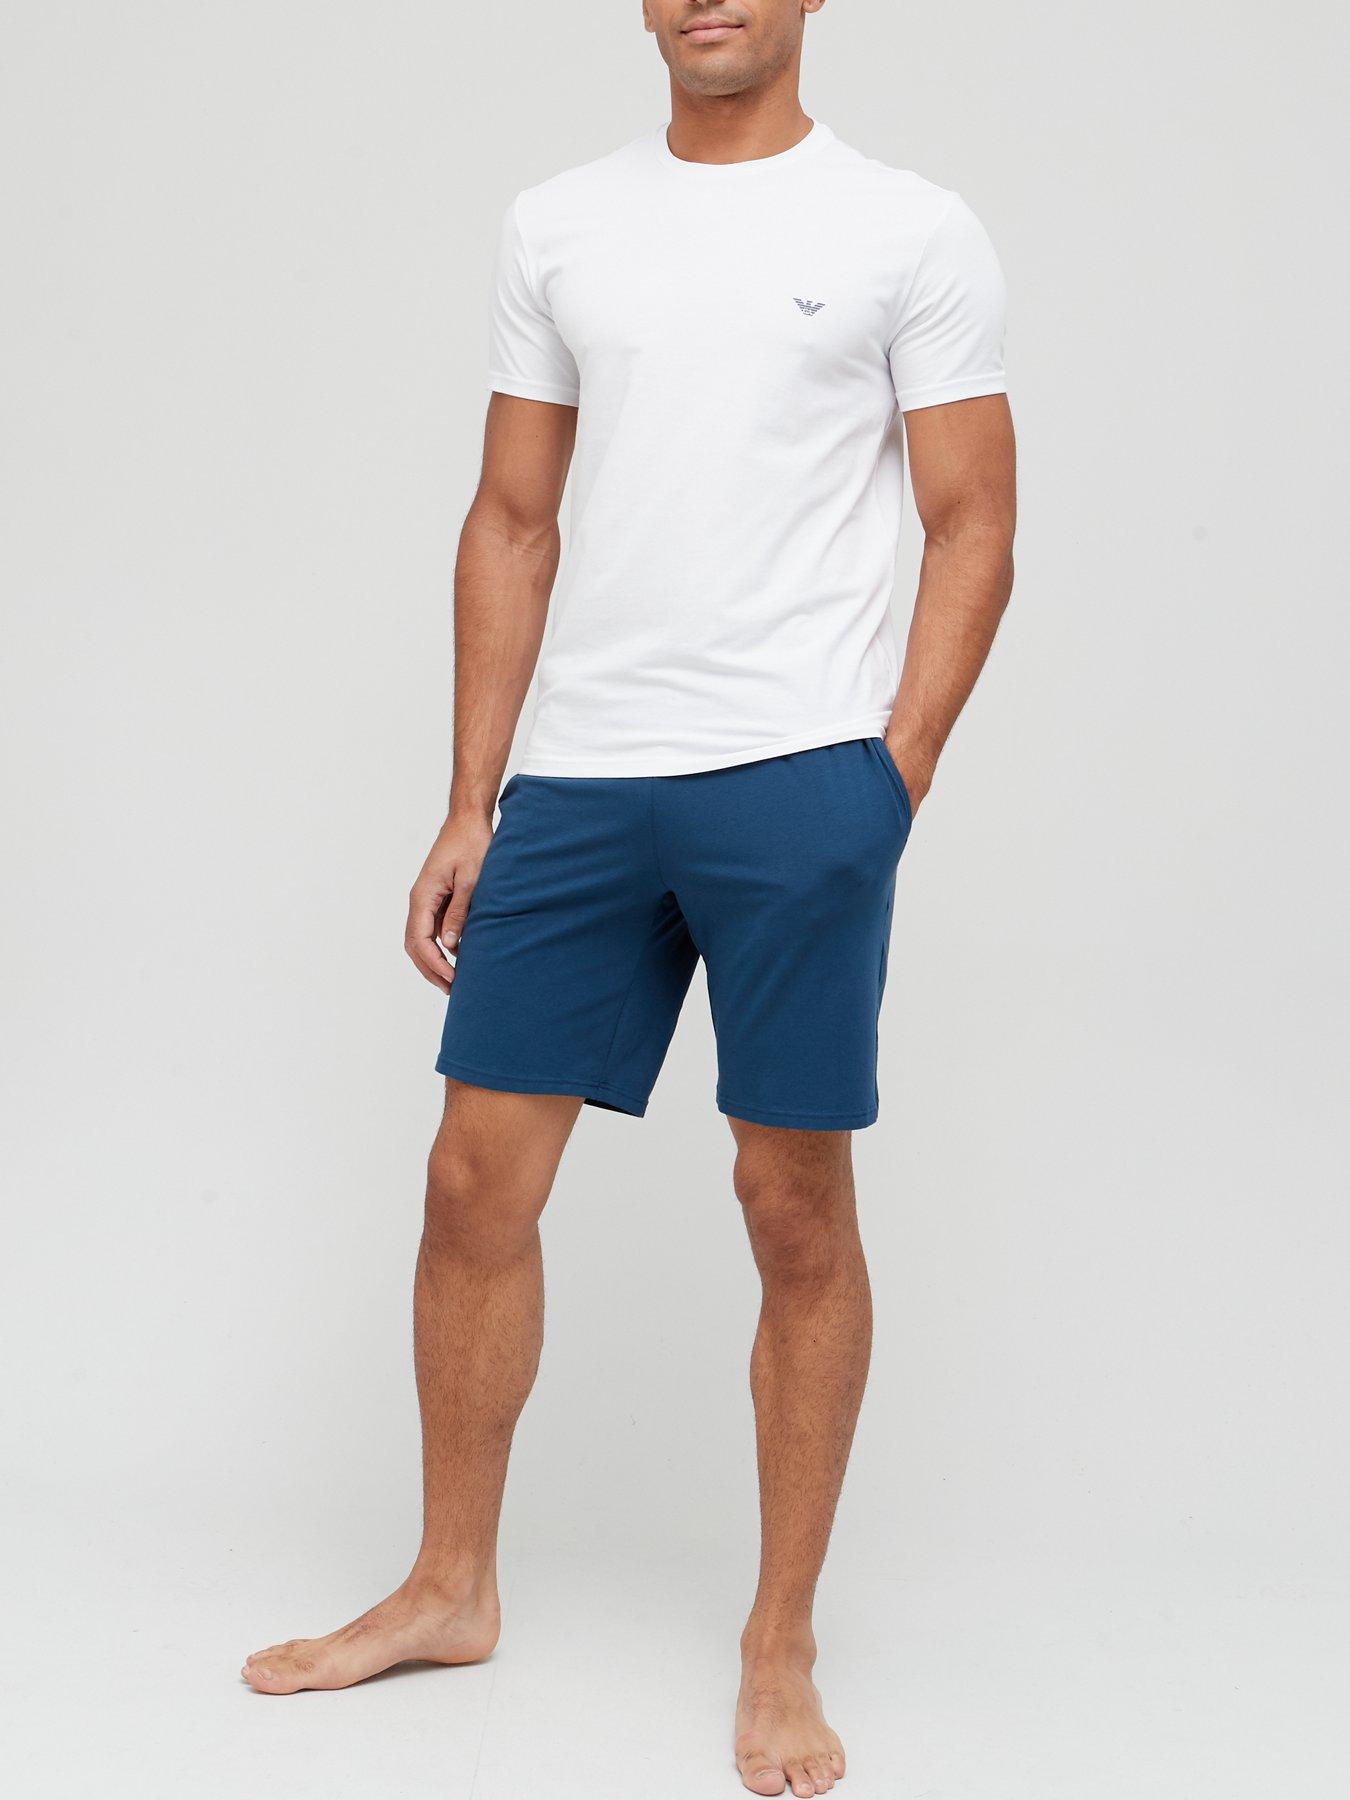  Endurance Lounge T-Shirt And Short Set - Blue/White